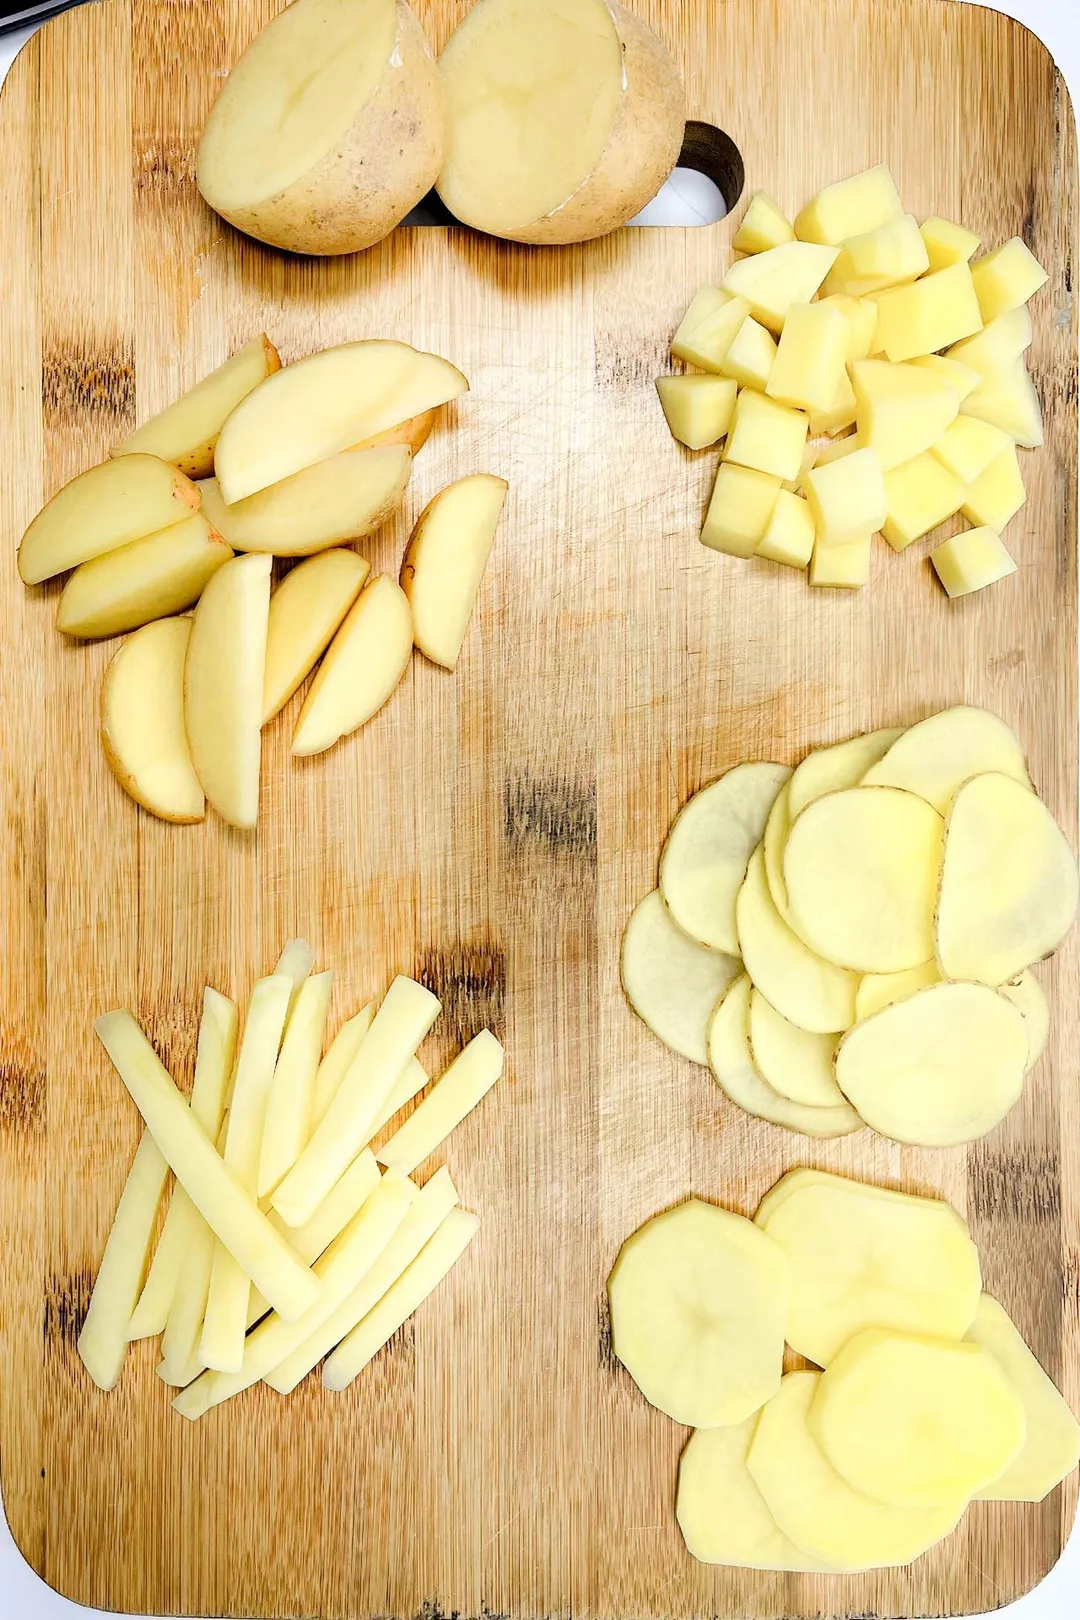 potato cuts: chopped, minced, diced, sliced... on a cutting board